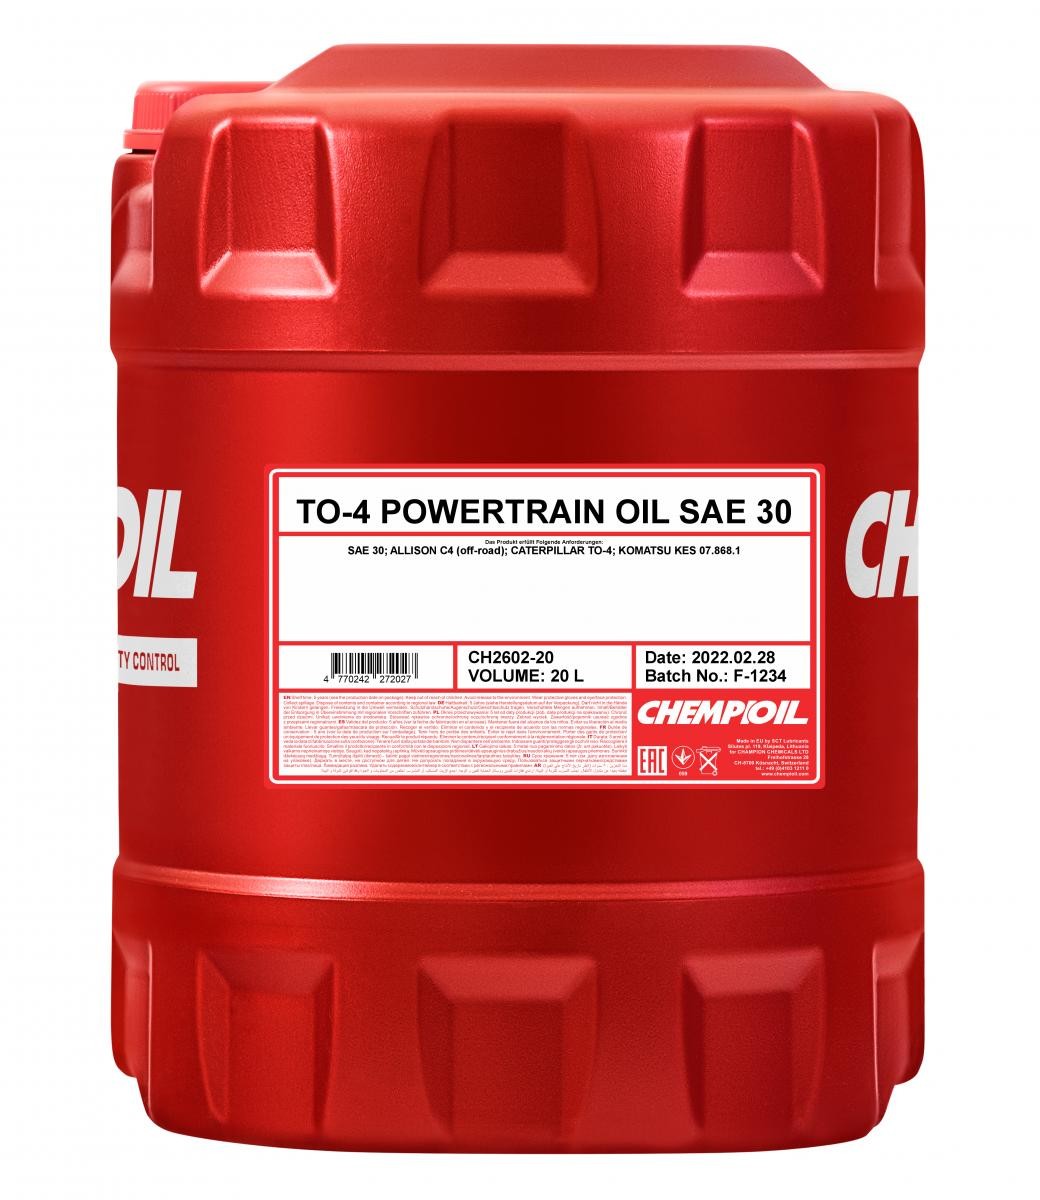 CHEMPIOIL POWERTRAIN OIL, TO-4 CH2602-20 Engine oil SAE 30, 20l